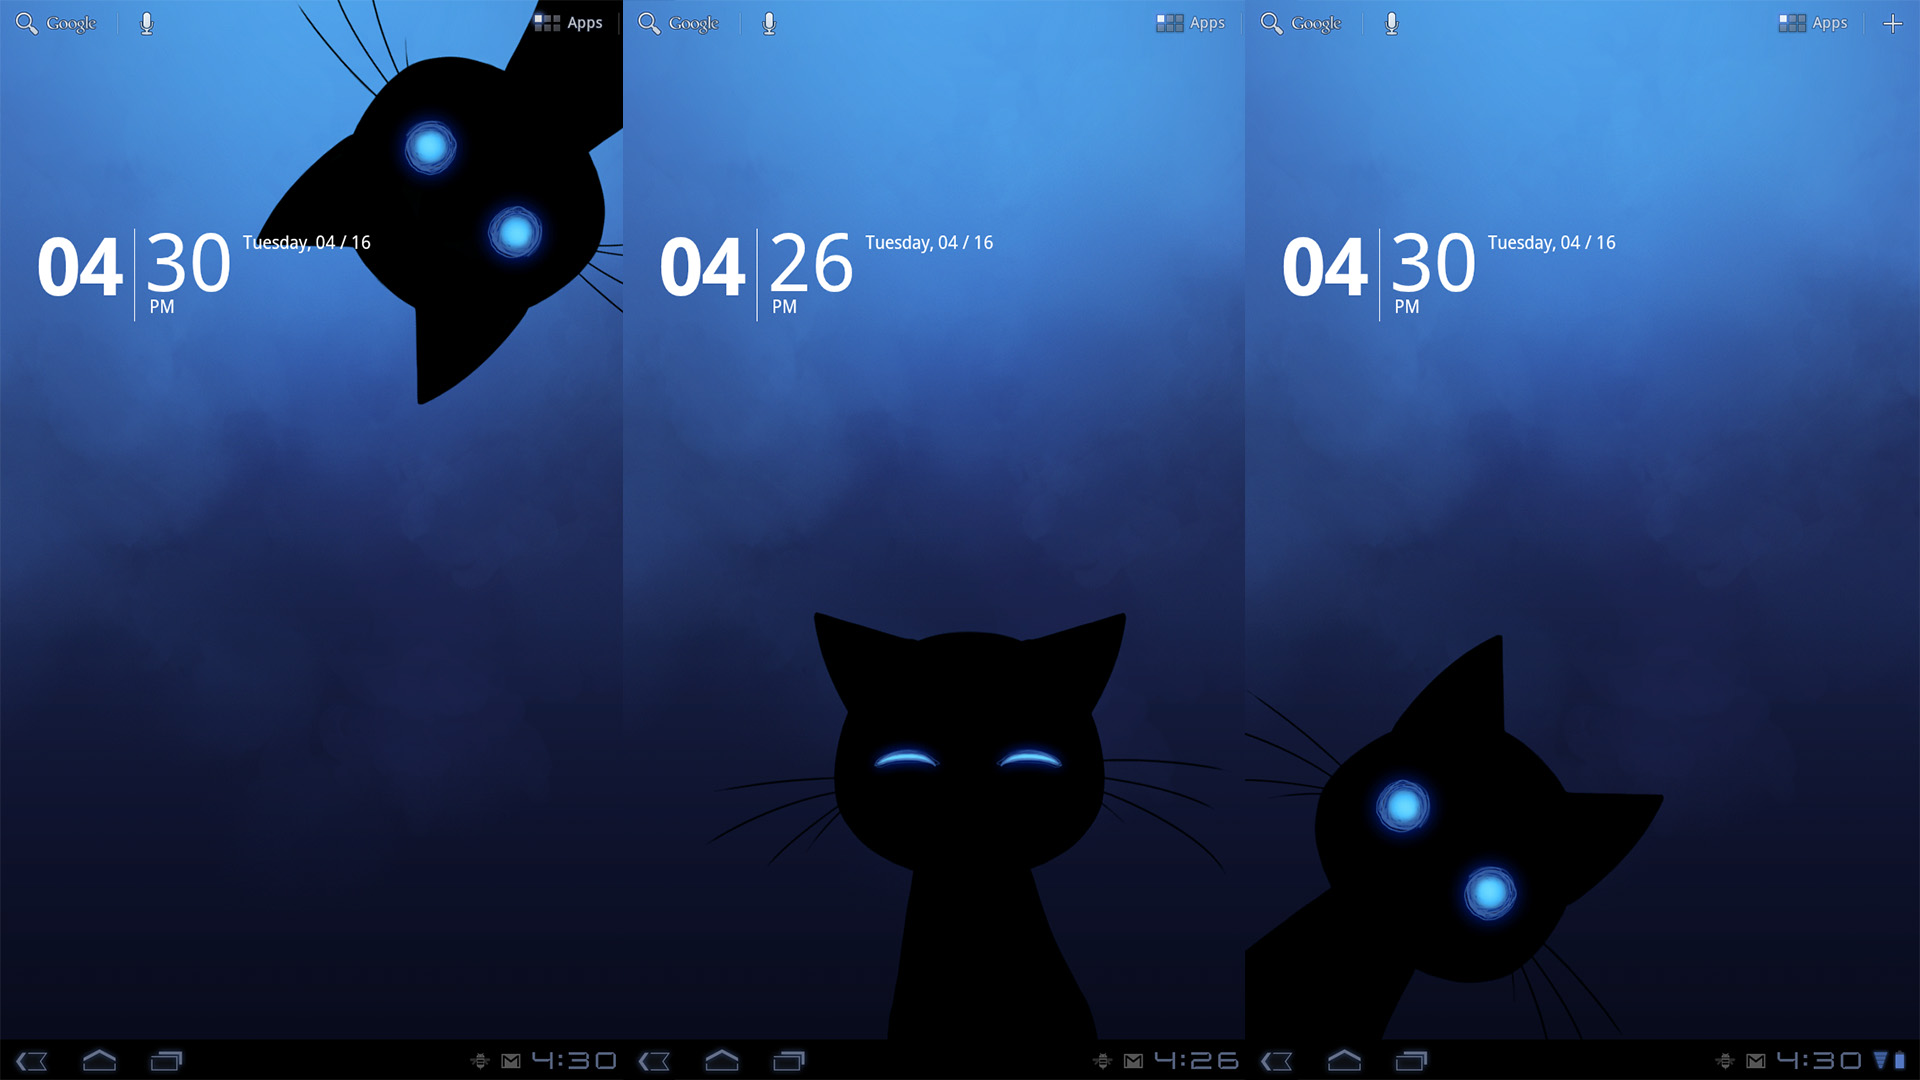 Stalker Cat Live Wallpaper screenshot 2022